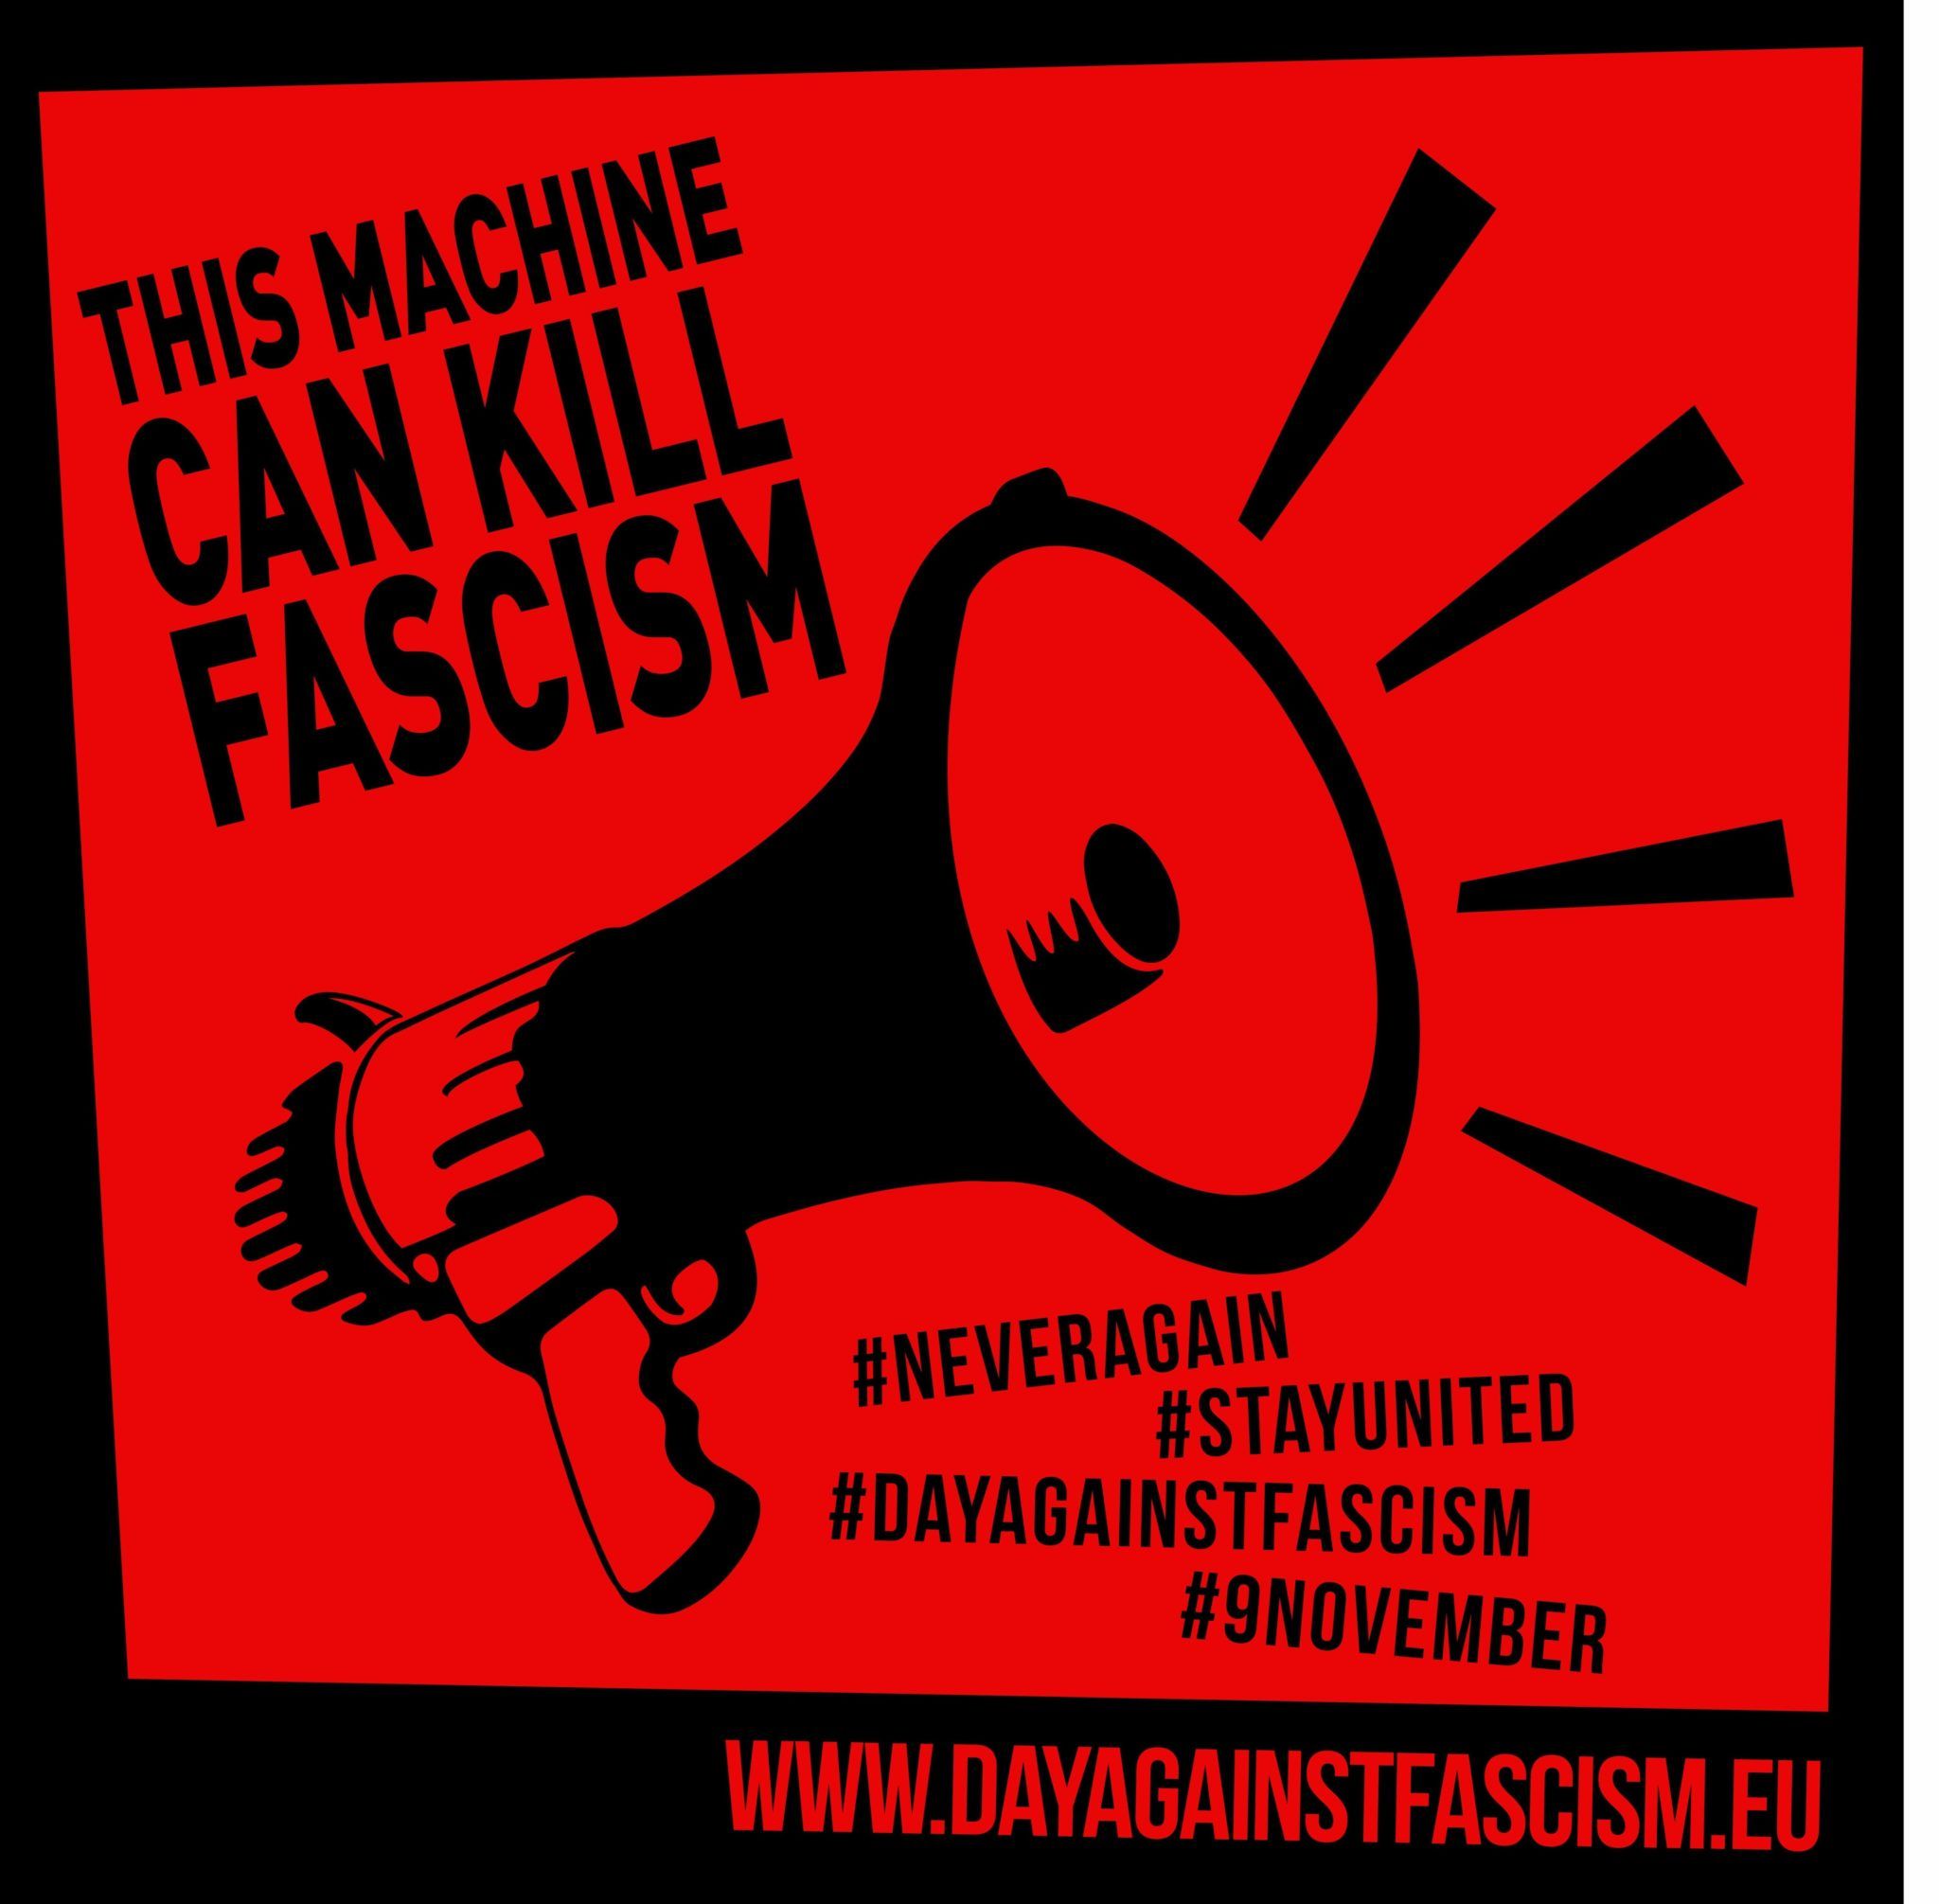 This machine can kill fascism